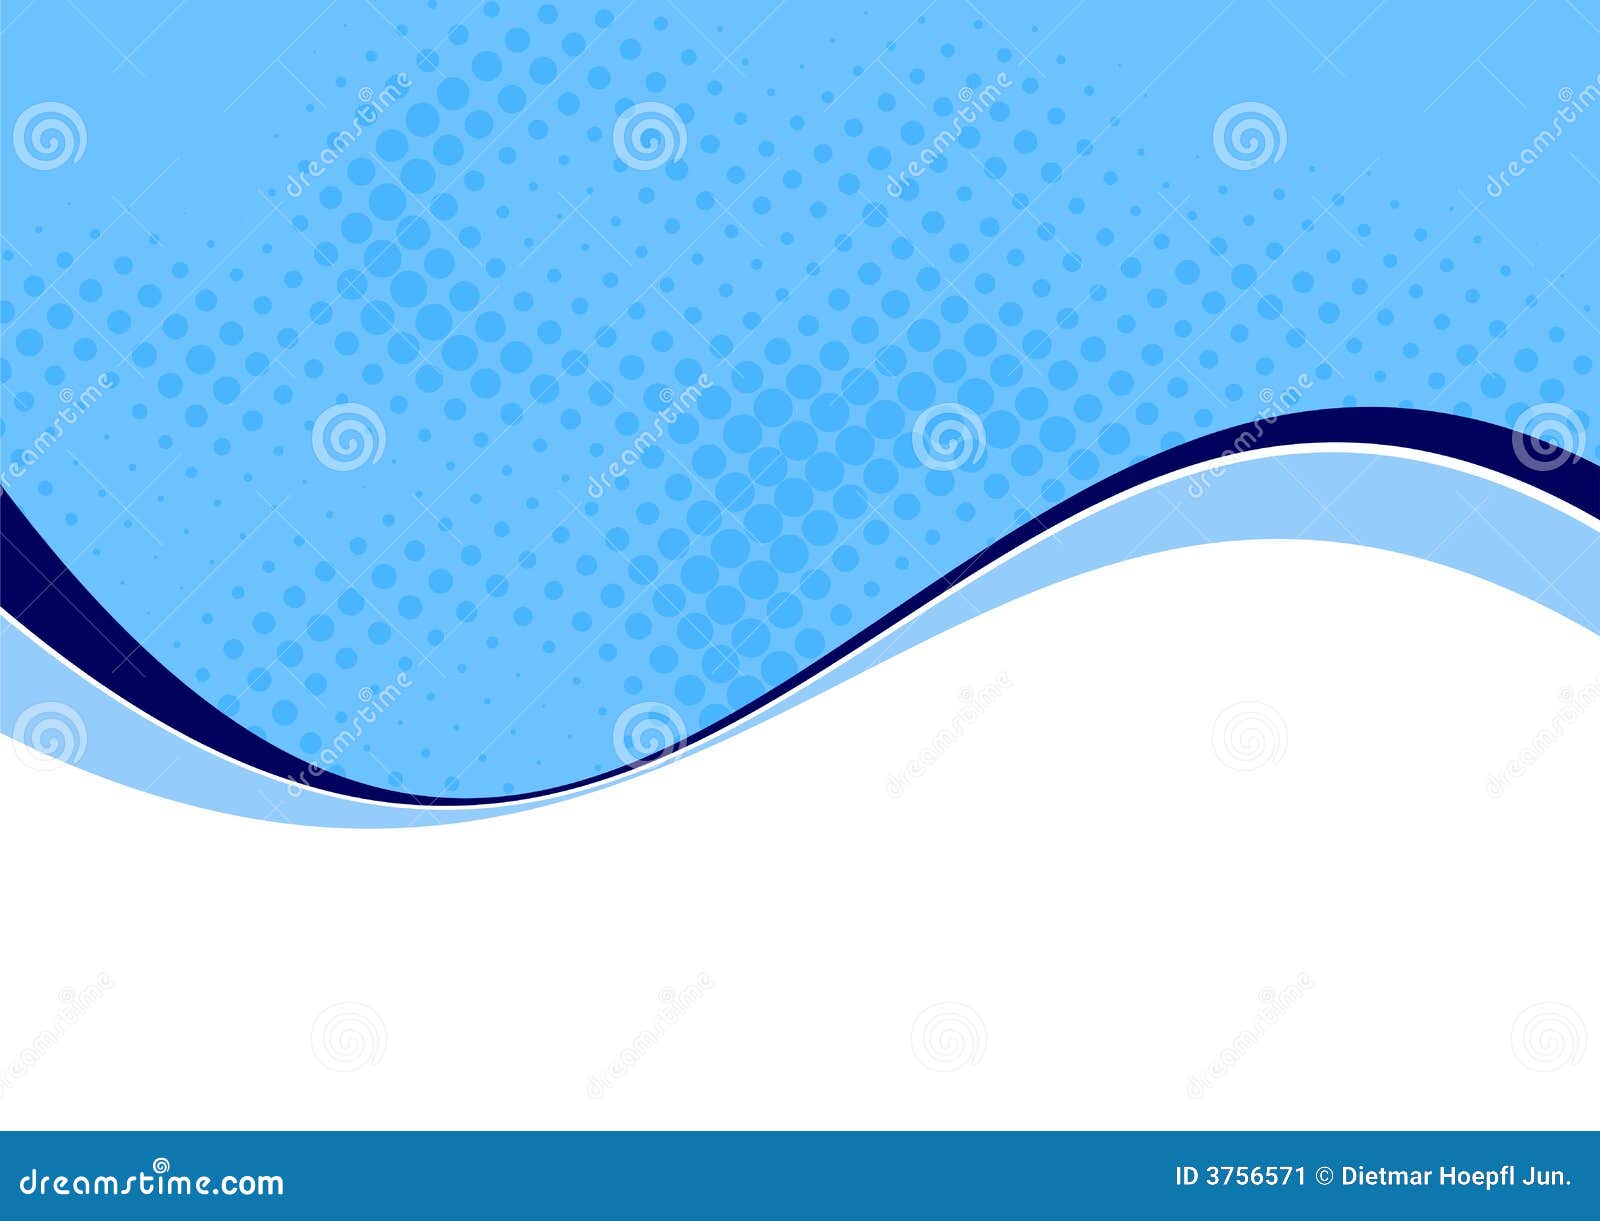 blue wavy curves on white